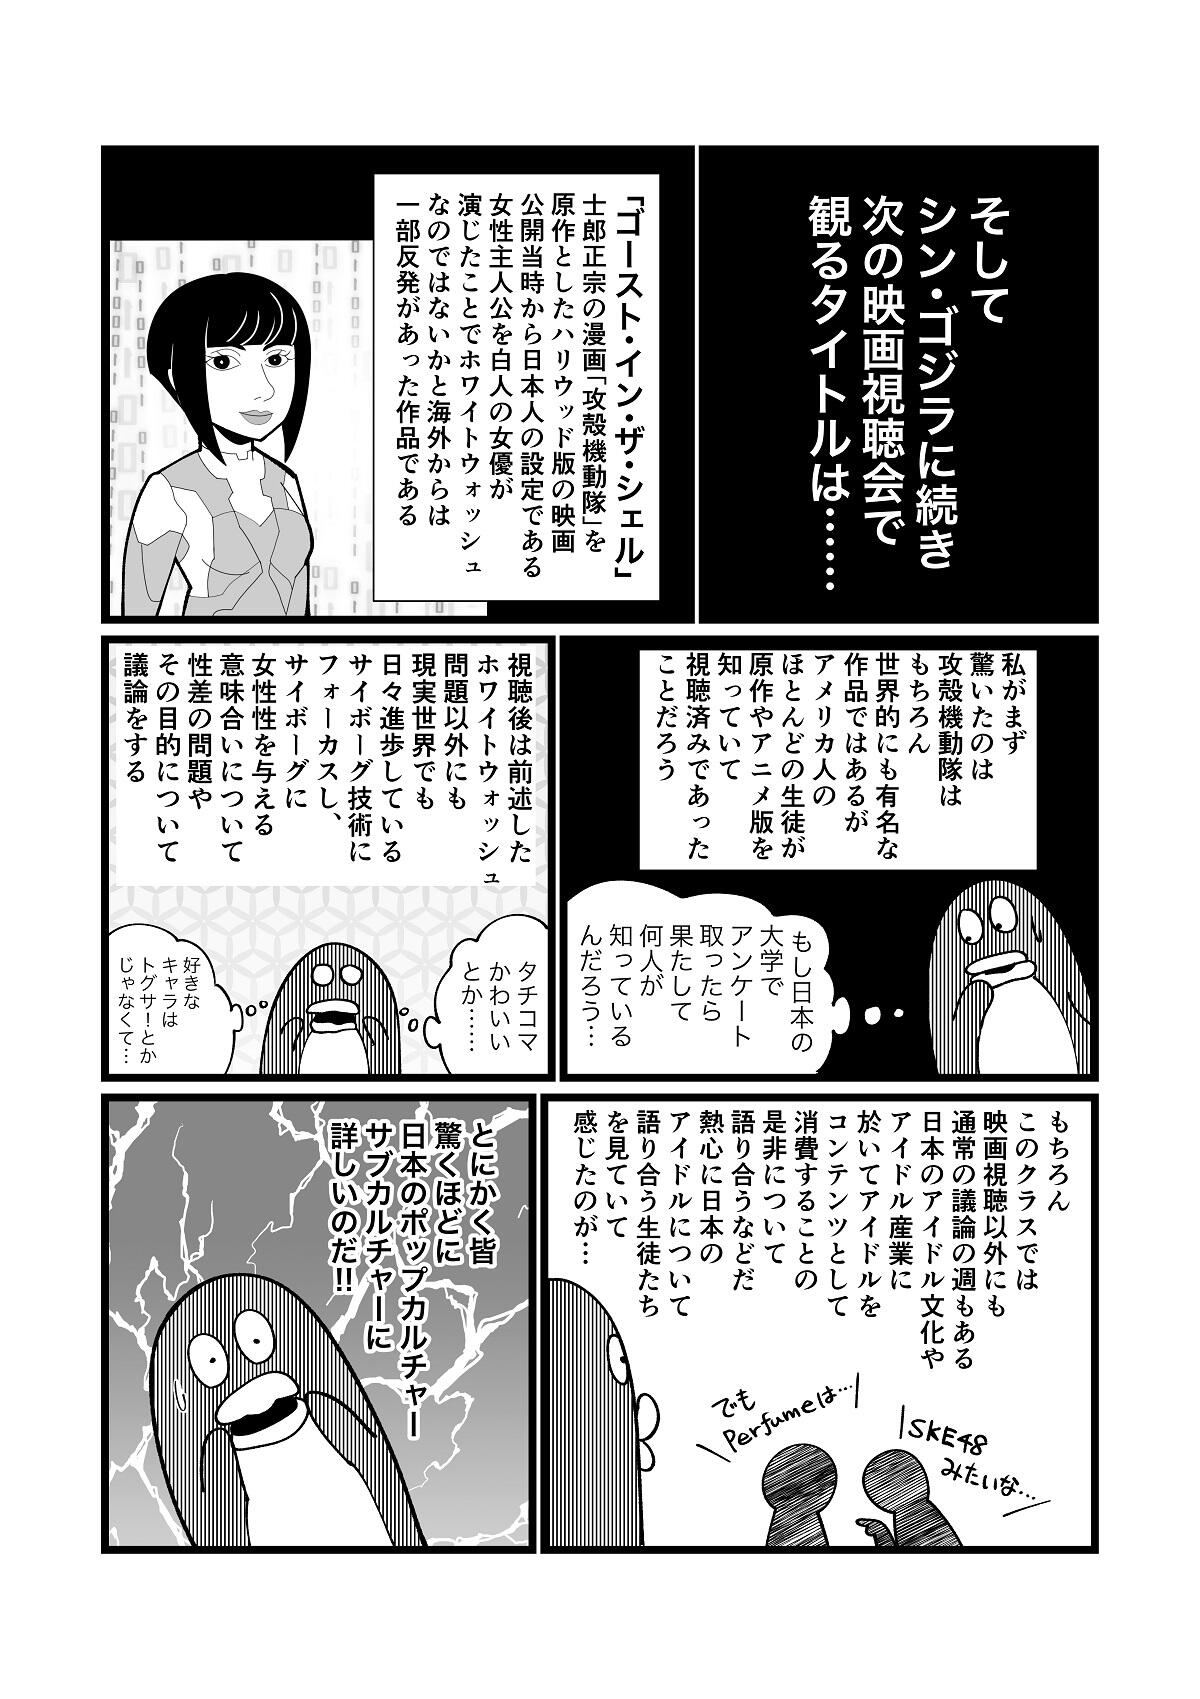 https://www.ryugaku.co.jp/column/images/jawamura20_5_1200.jpg